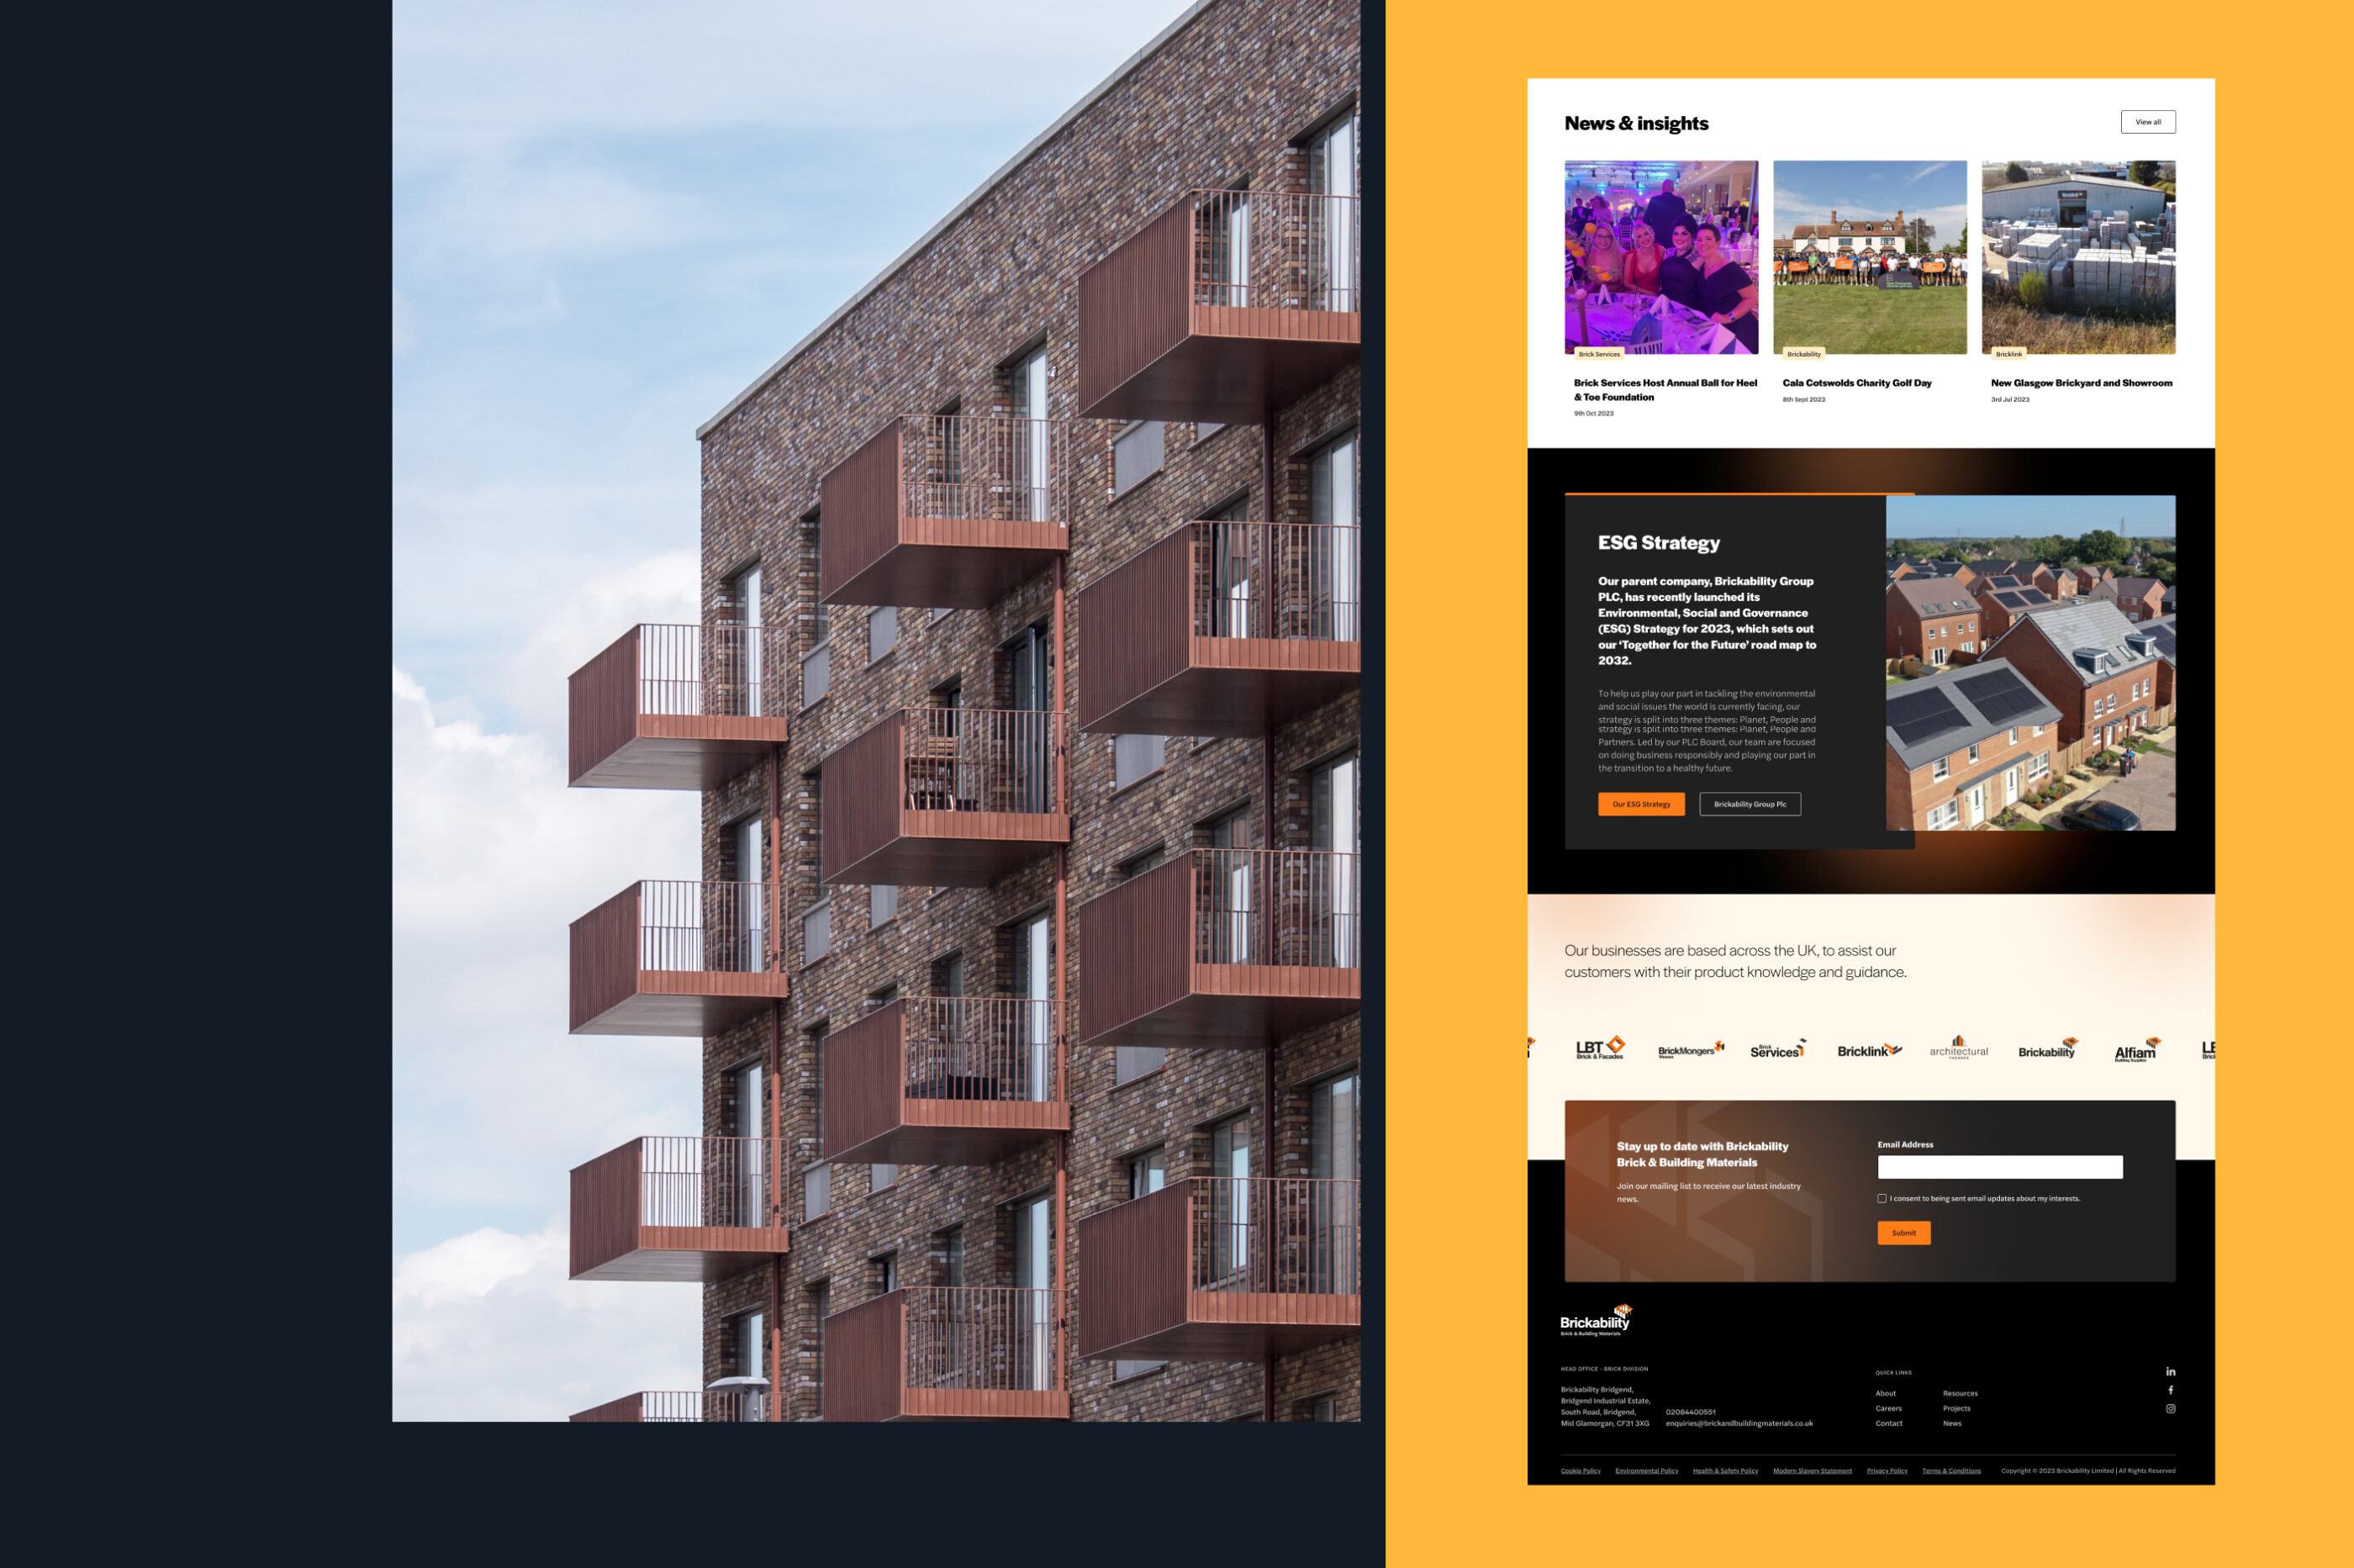 Brickability webpage design alongside brick architecture